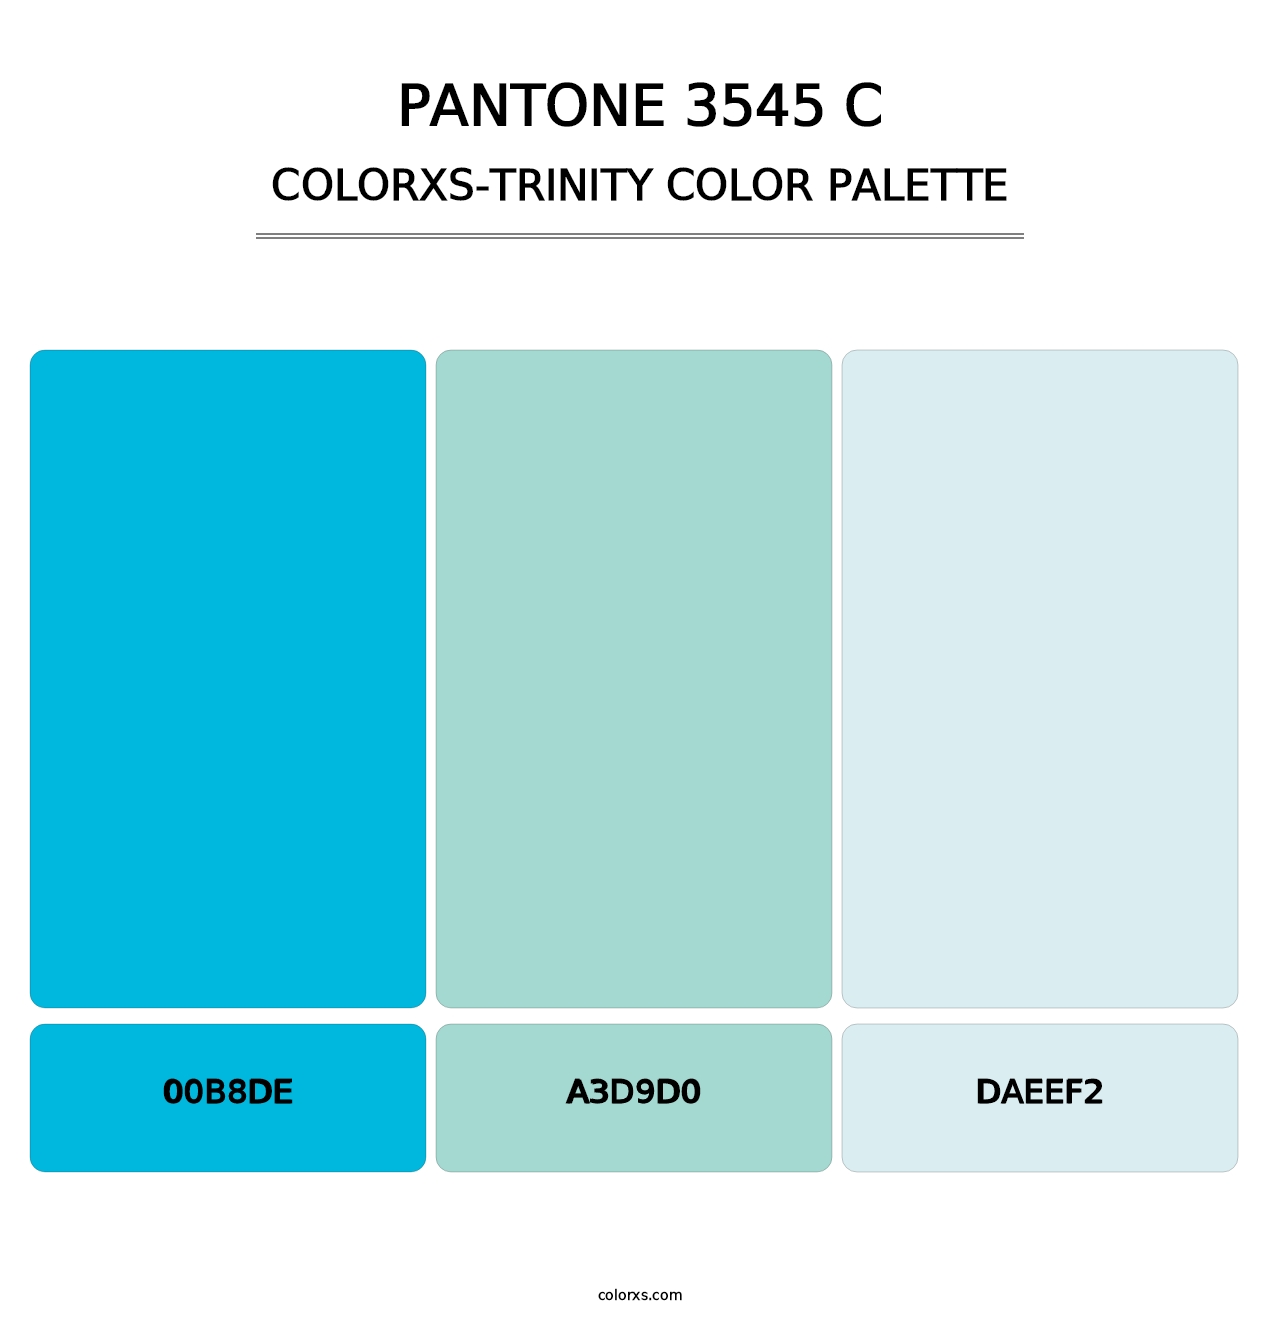 PANTONE 3545 C - Colorxs Trinity Palette